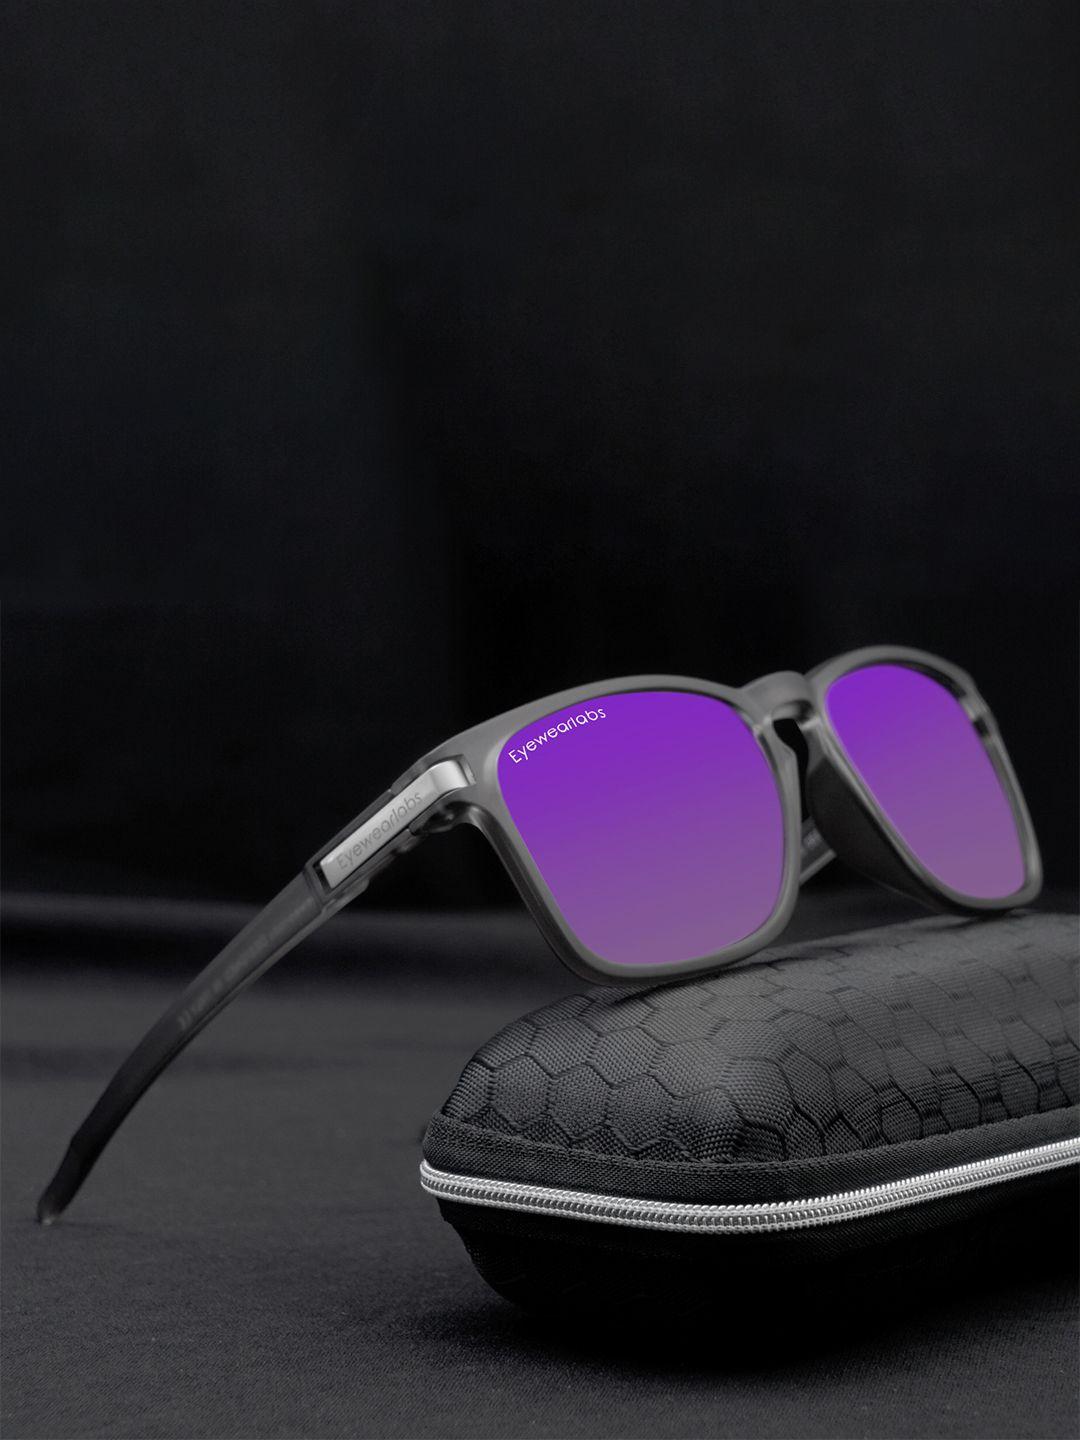 eyewearlabs wayfarer sunglasses with polarised & uv protected lens ccypherpurplesc4el1139